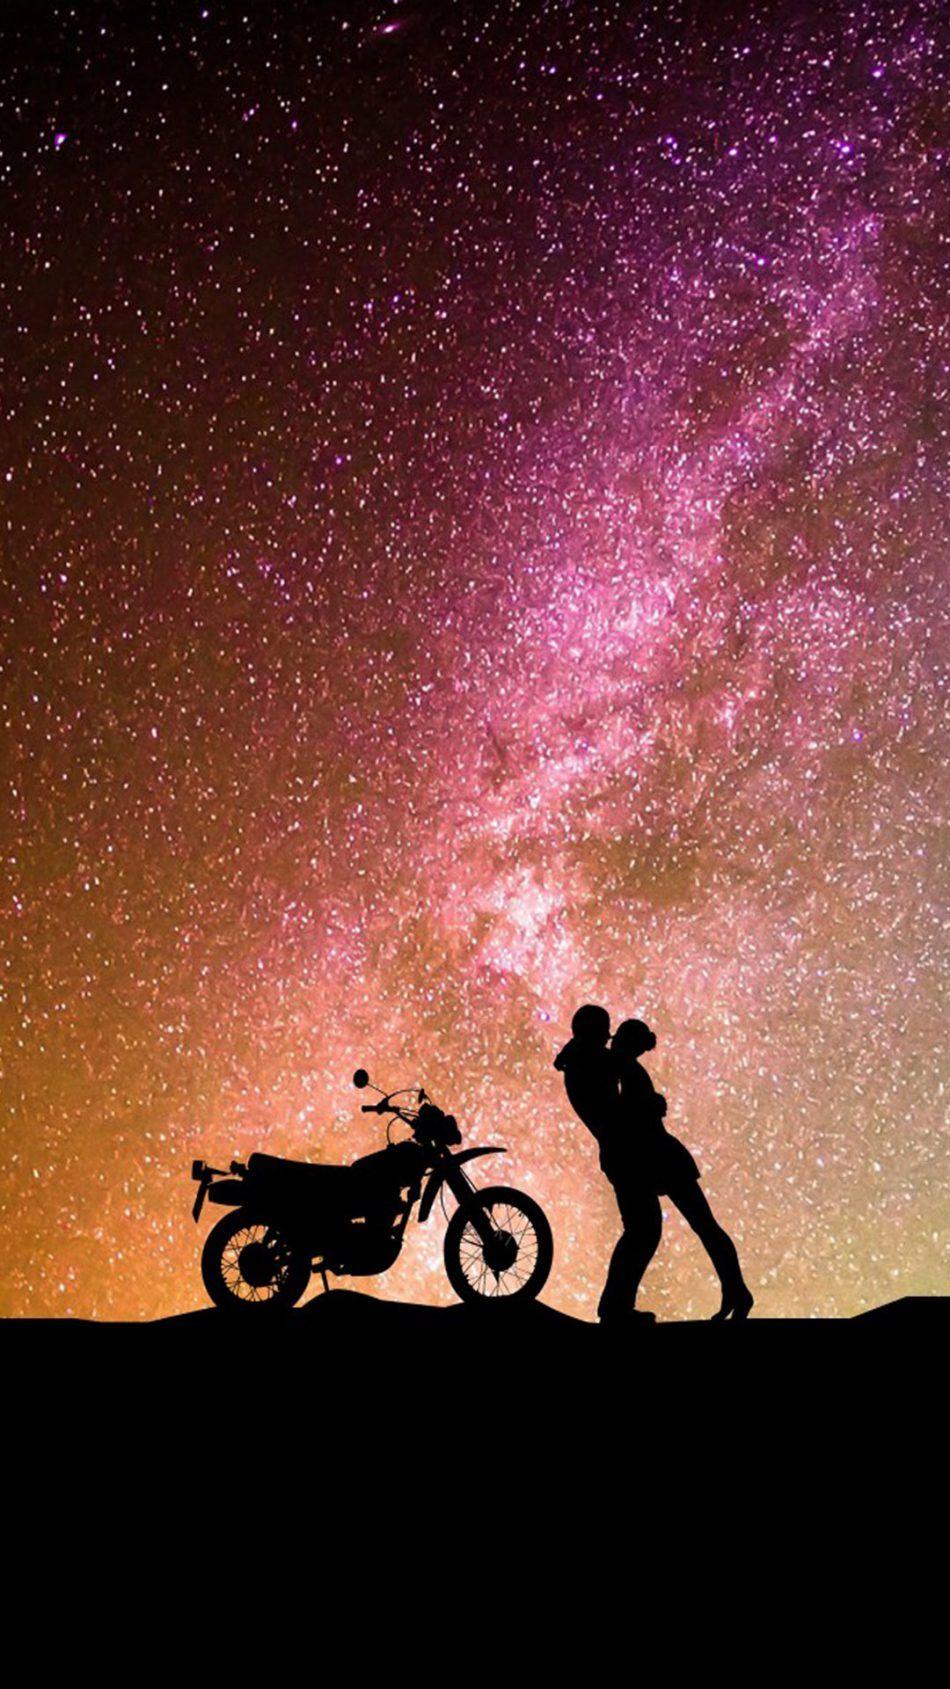 Couple Romantic Kiss Motorcycle 4K Ultra HD Mobile Wallpaper. Love couple wallpaper, Couple wallpaper, Romantic wallpaper